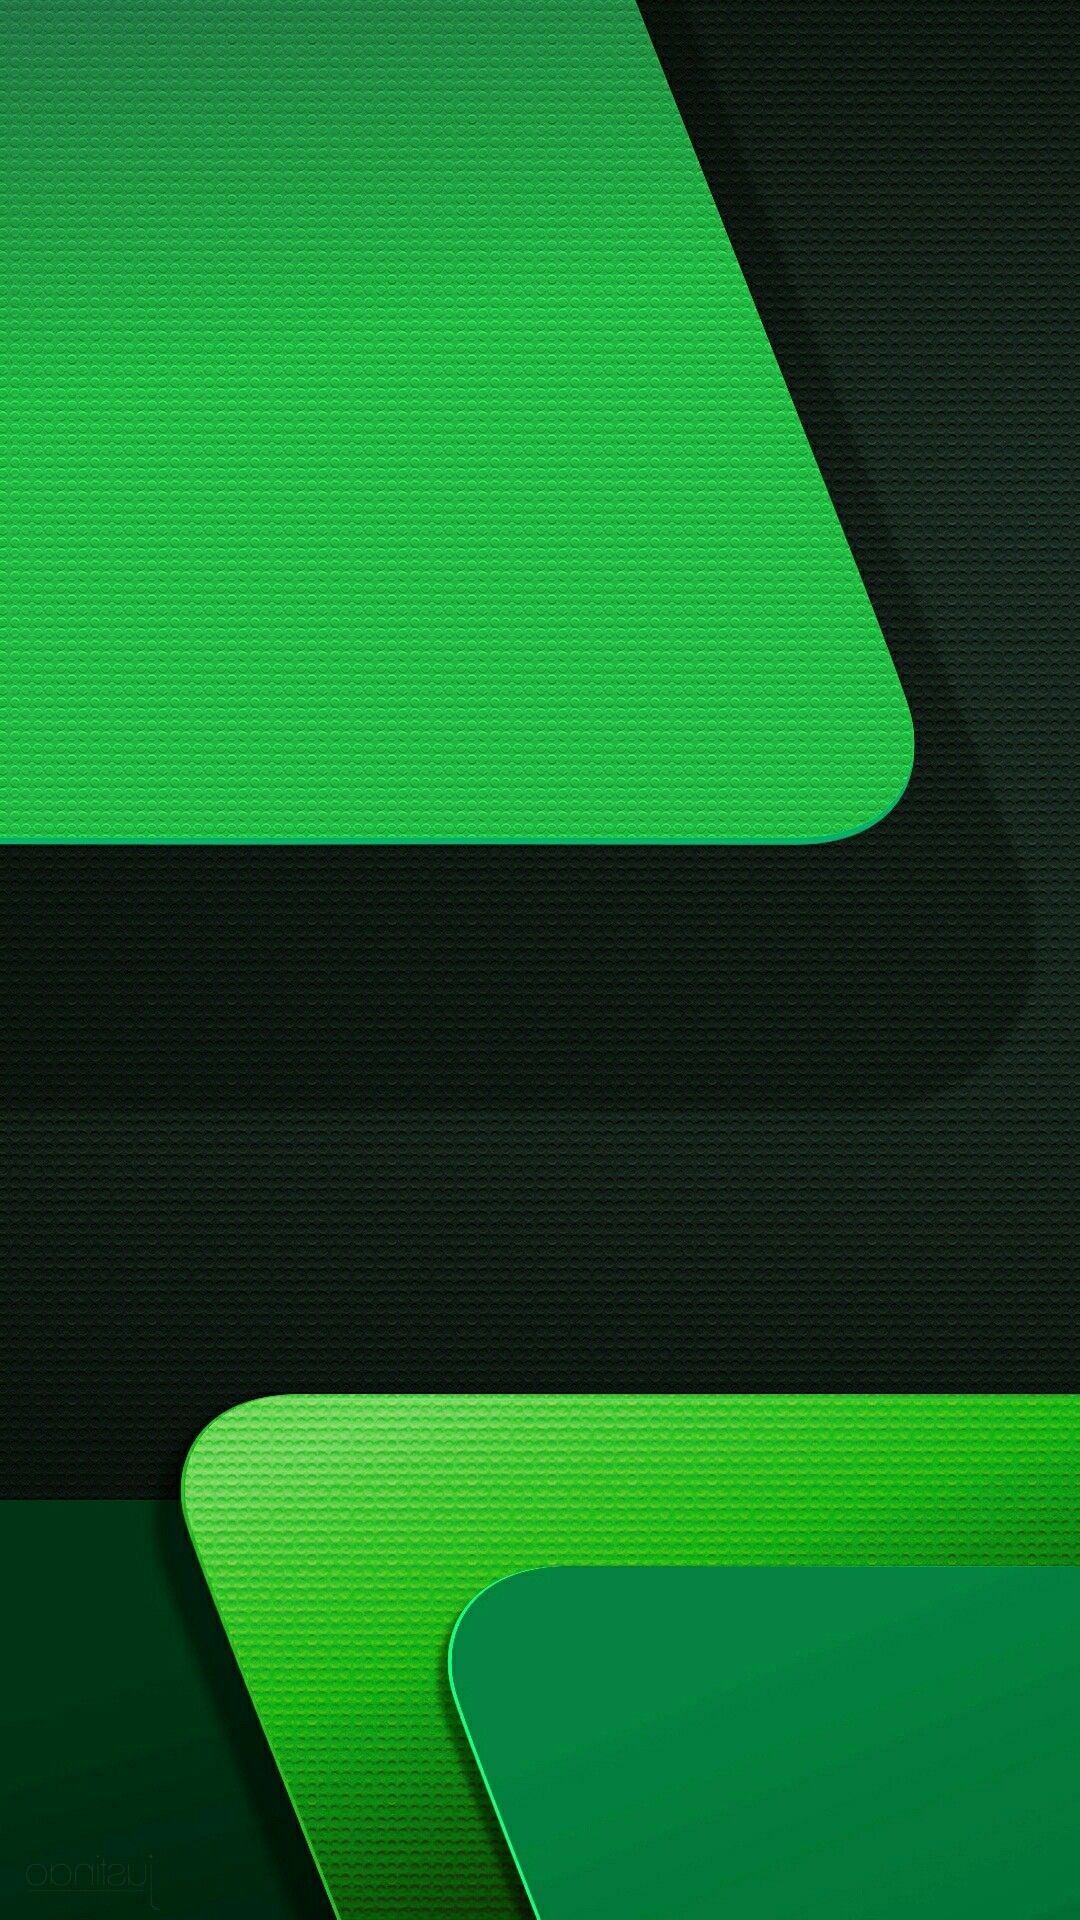 Green Phone Wallpaper Free Green Phone Background